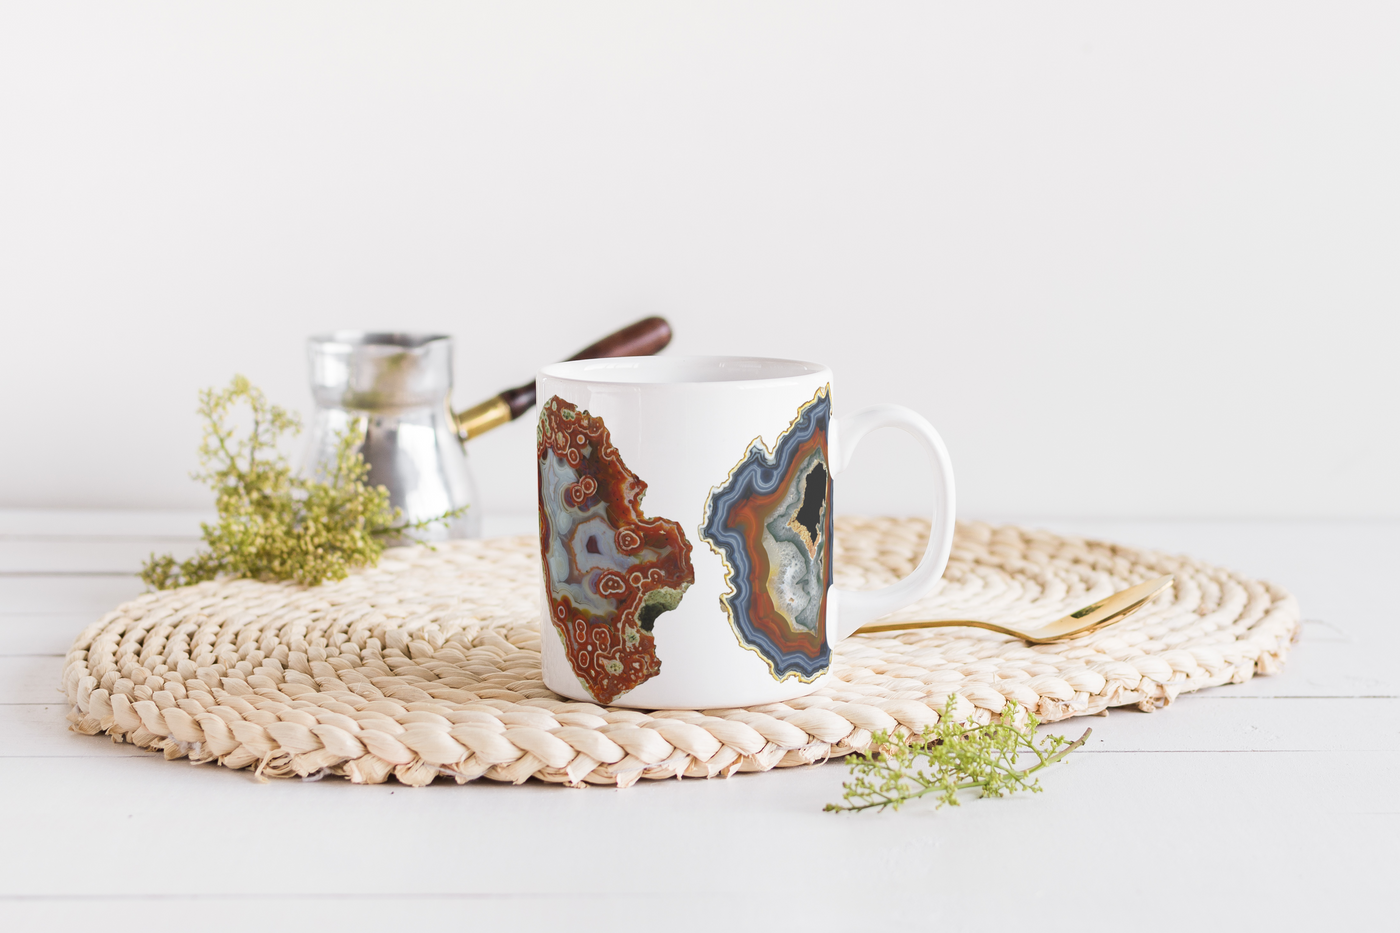 Boho Agate Geode Ceramic Mug - Crystals - Gemstones - Vintage Tea Cup, Perfect Gift for Crystal Lovers and Rockhounds